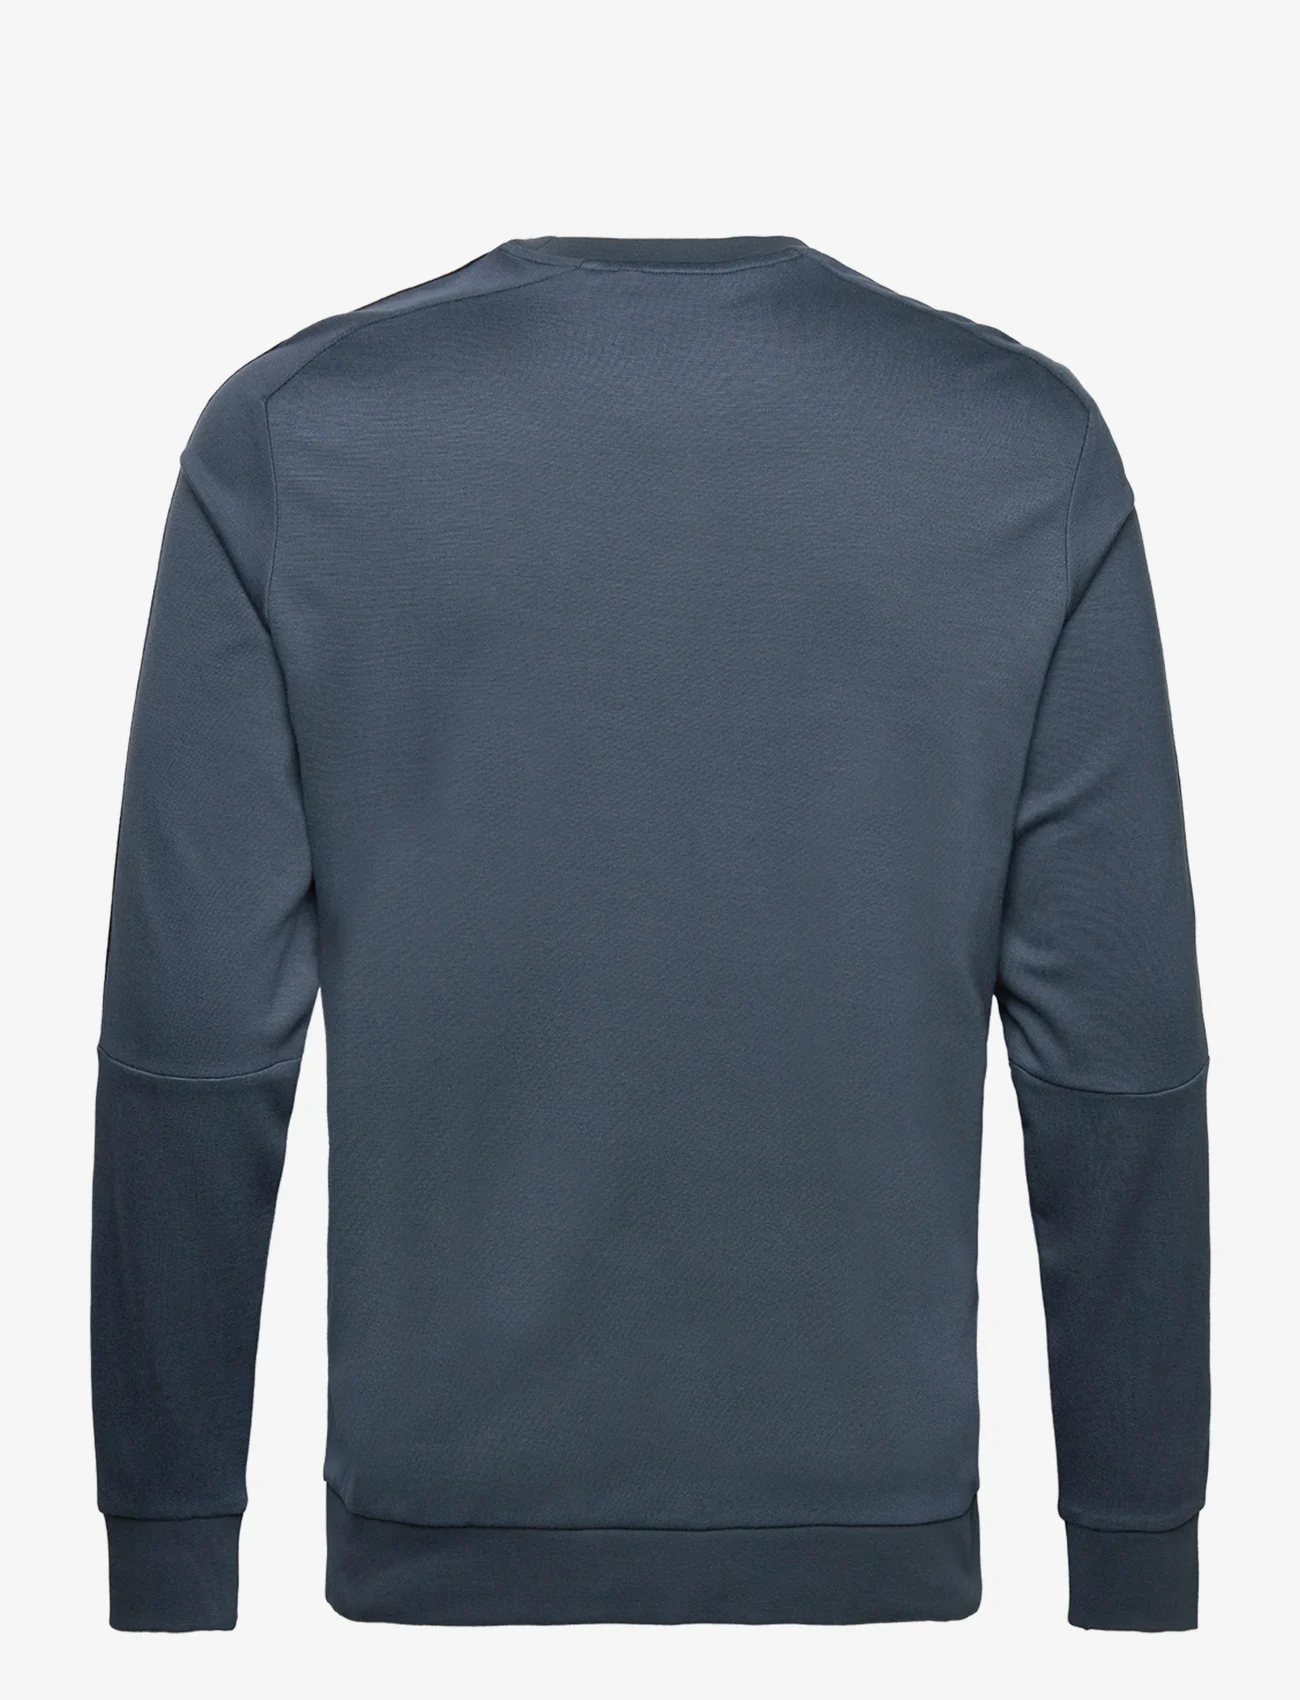 Lyle & Scott Sport - Pocket Branded Sweat Crew - sweatshirts - z118 light navy - 1